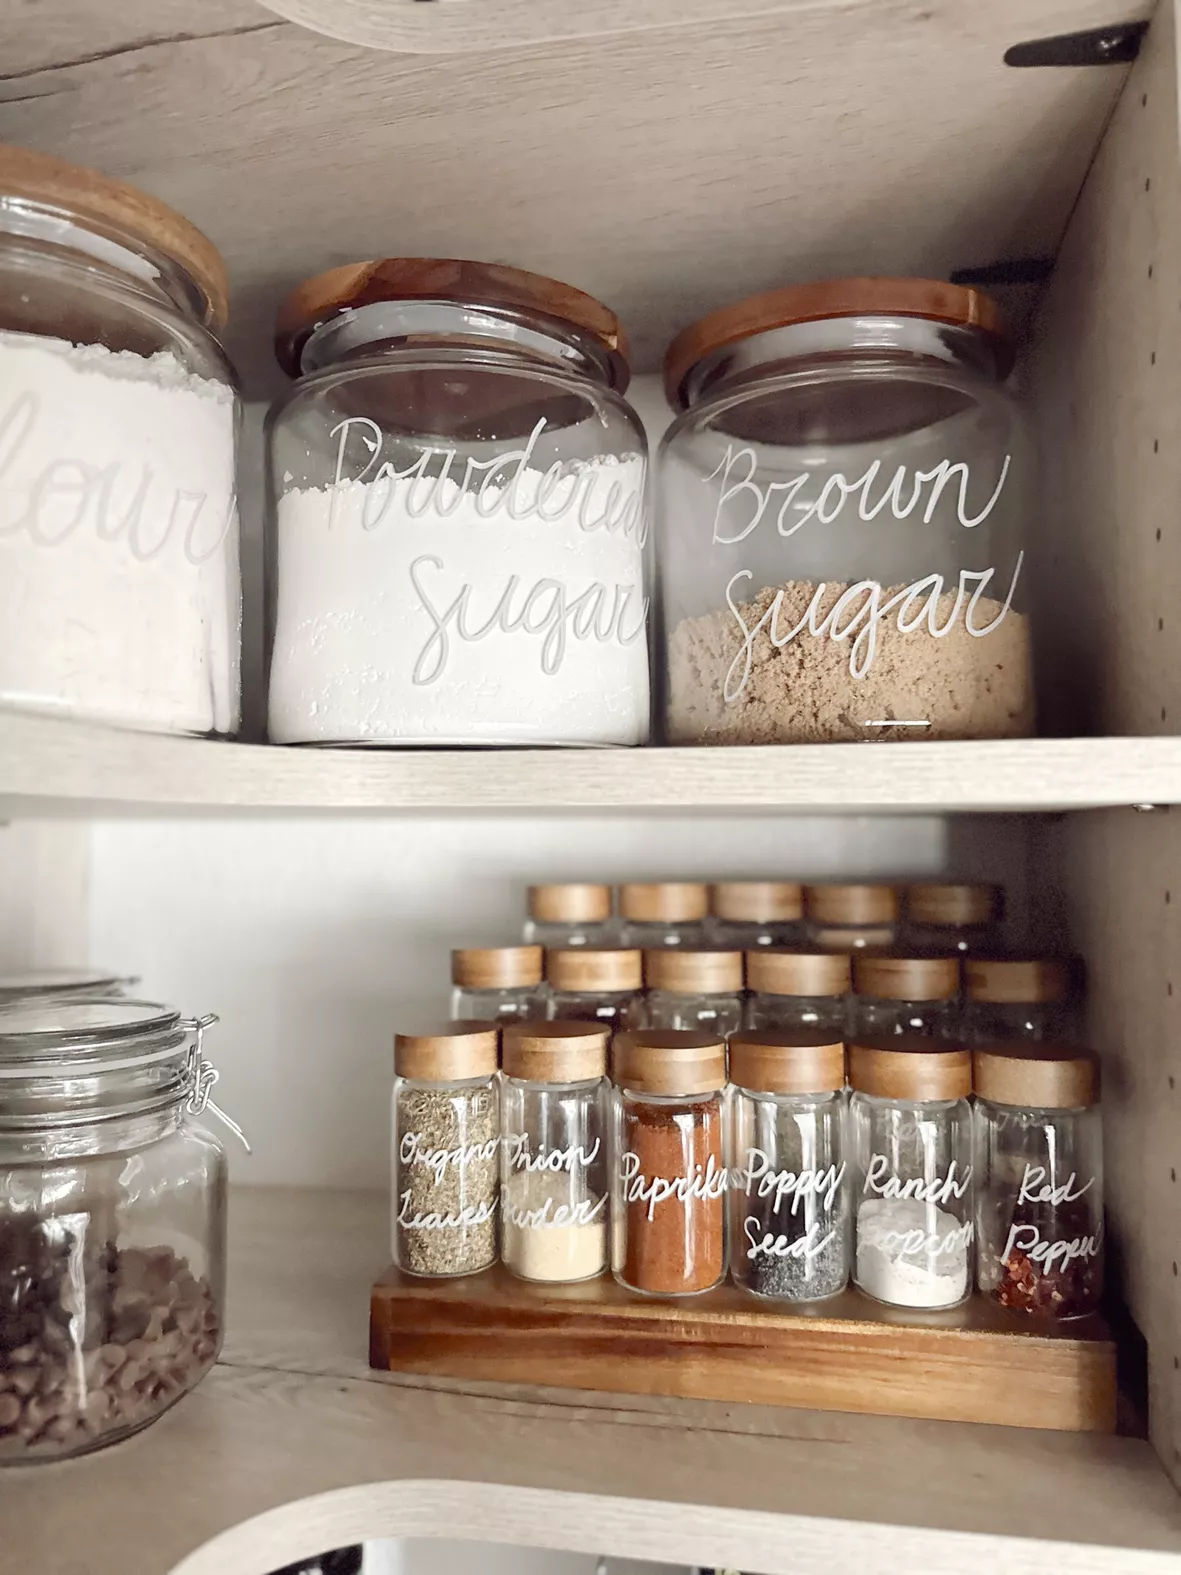 Marie Kondo Glass Spice Jar w/ … curated on LTK